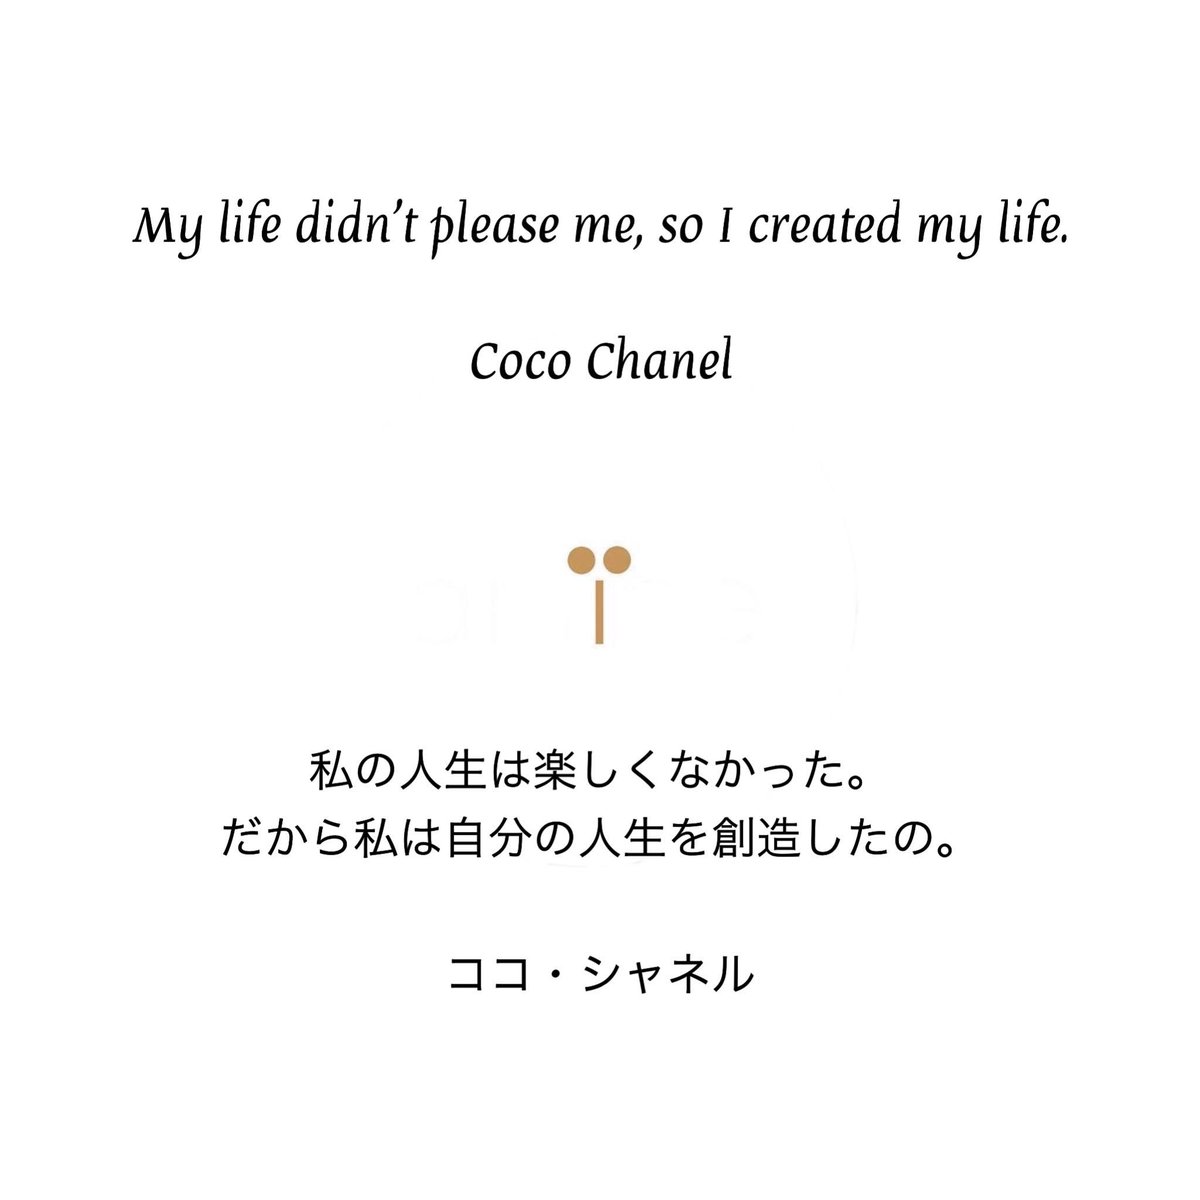 Amiee アミー 環境配慮型ブランド My Life Didn T Please Me So I Created My Life Coco Chanel 私の人生は楽しくなかった だから私は自分の人生を創造したの ココ シャネル Cocochanel Chanel ココシャネル シャネル Amiee アミー